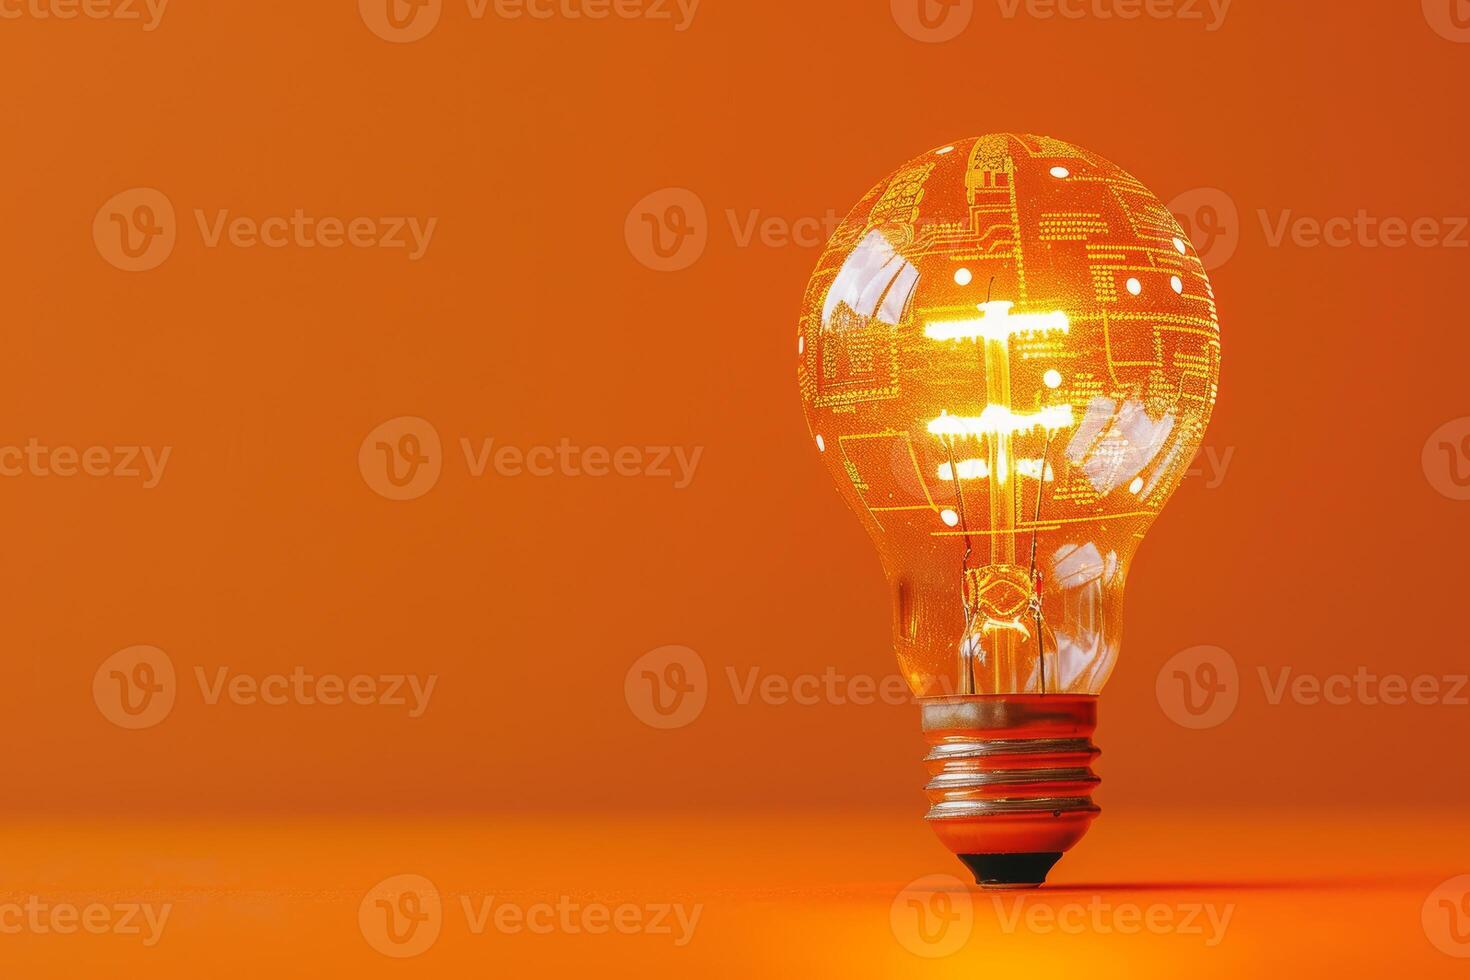 tecnologia luz lâmpada em a laranja fundo idéia conceito foto